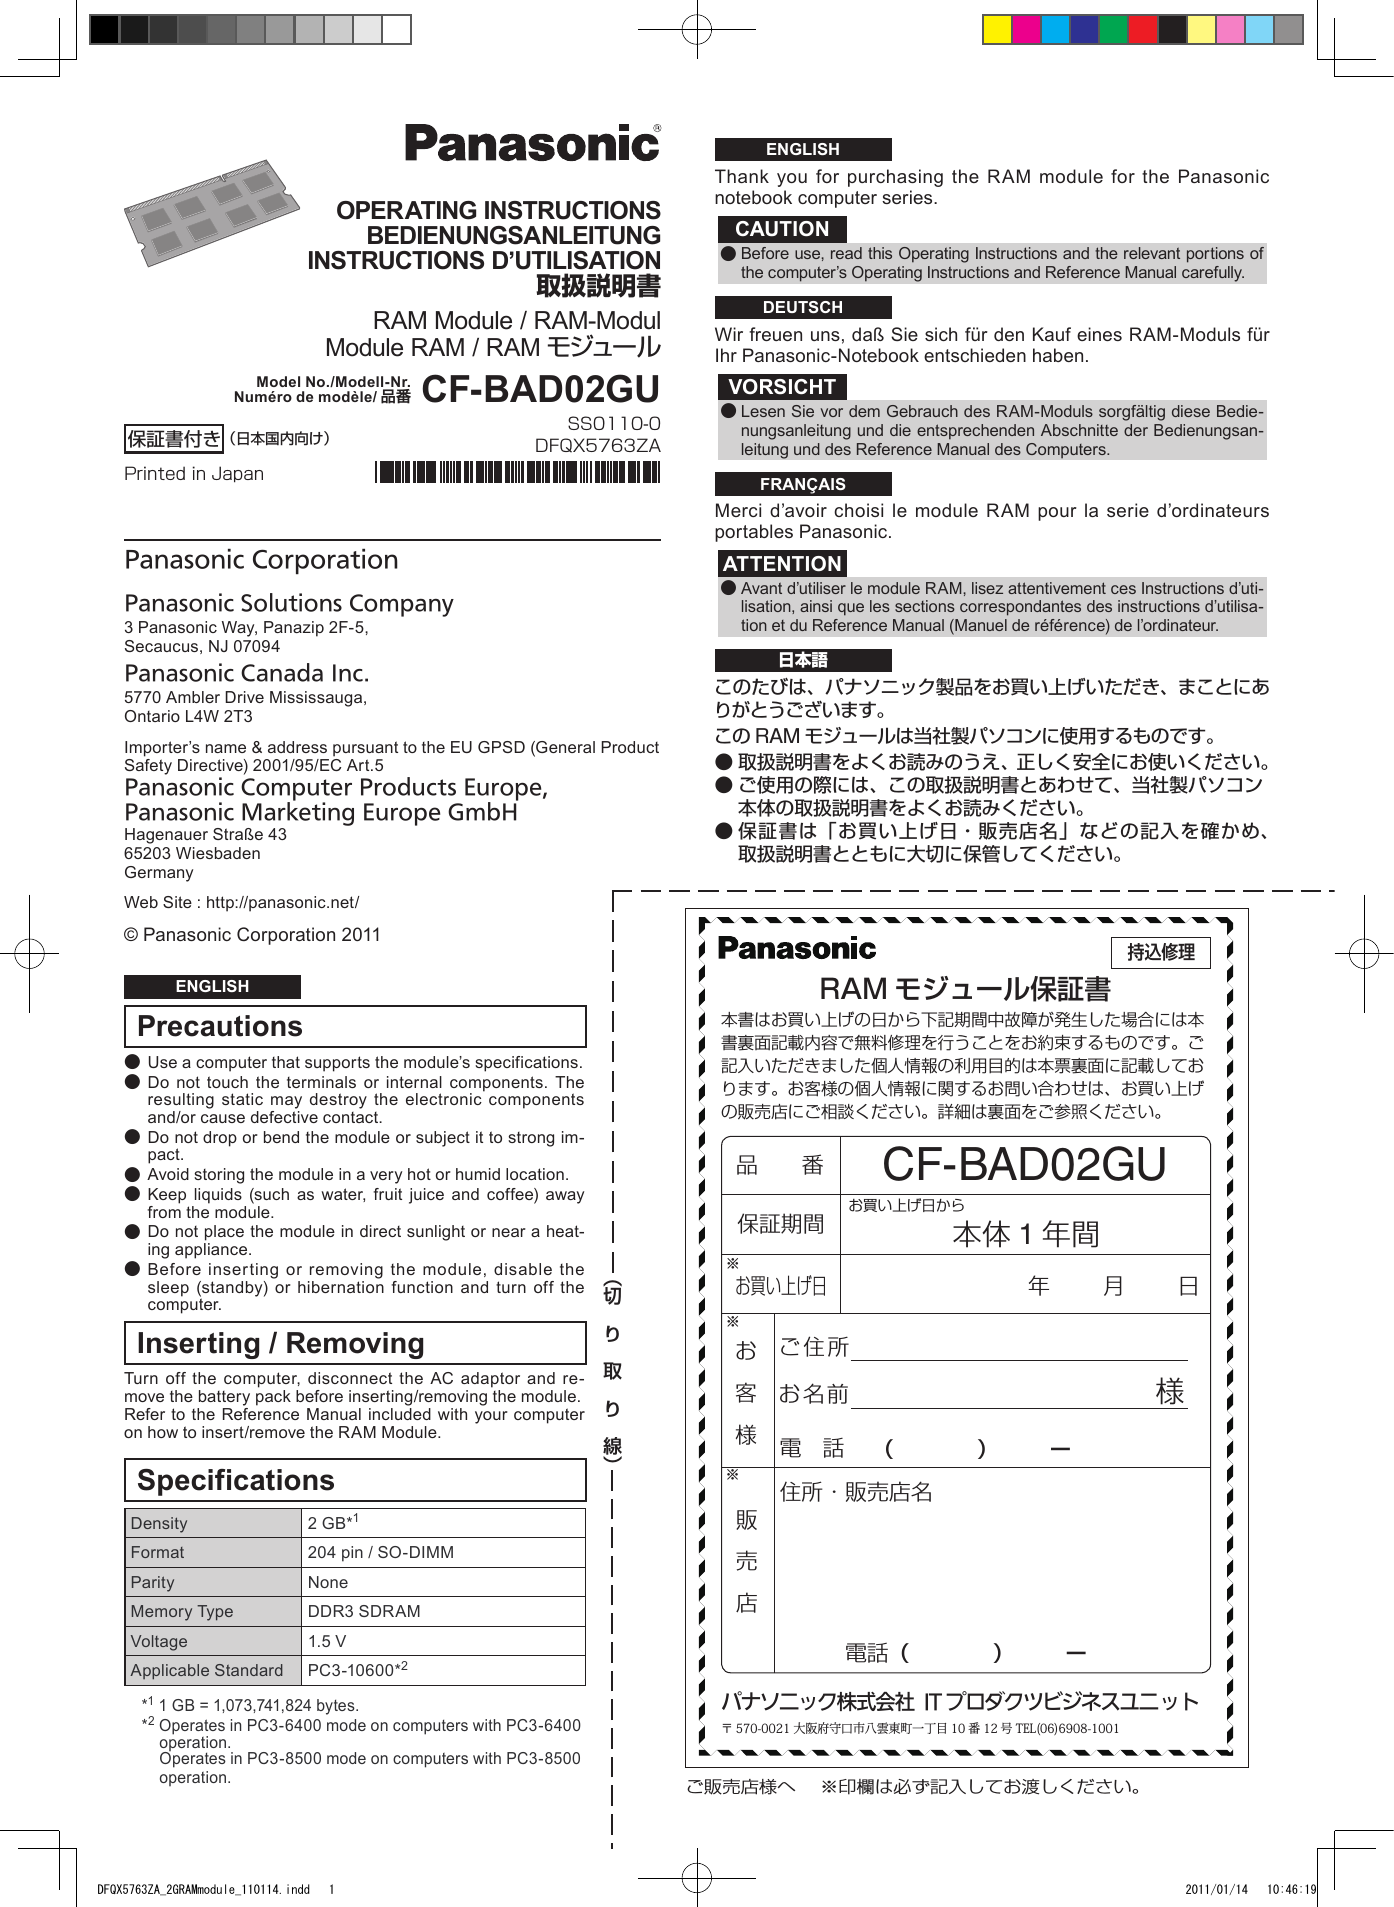 Page 1 of 2 - Panasonic CF-BAxxxxx (RAM Module) DFQX5763ZA_2GRAMmodule_110114 User Manual : Operating Instructions (English/ German/ French/ Japanese) Bad02gu-oi-dfqx5763za-non-nonlogo-JMGF-p20110032